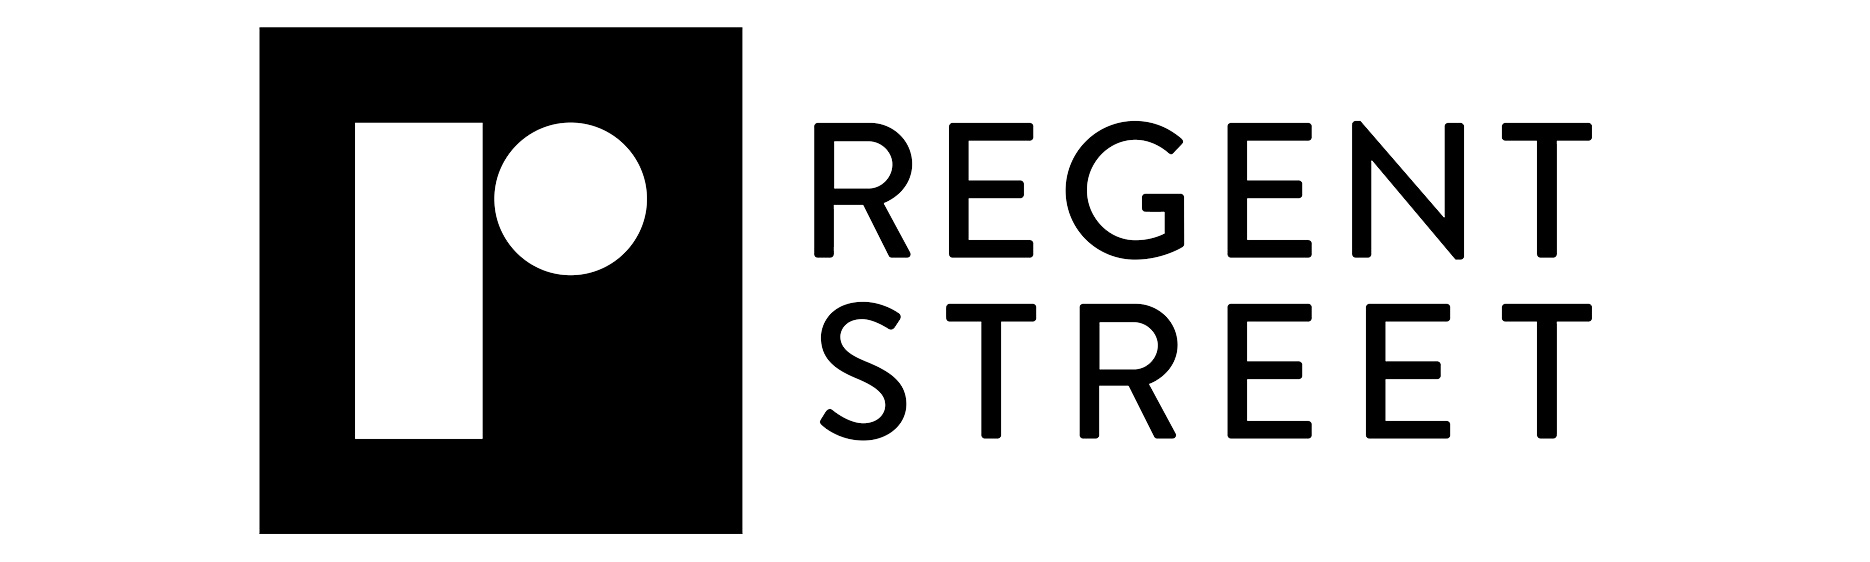 Regent Street logo - A Partner of London Restaurant Festival Centurion